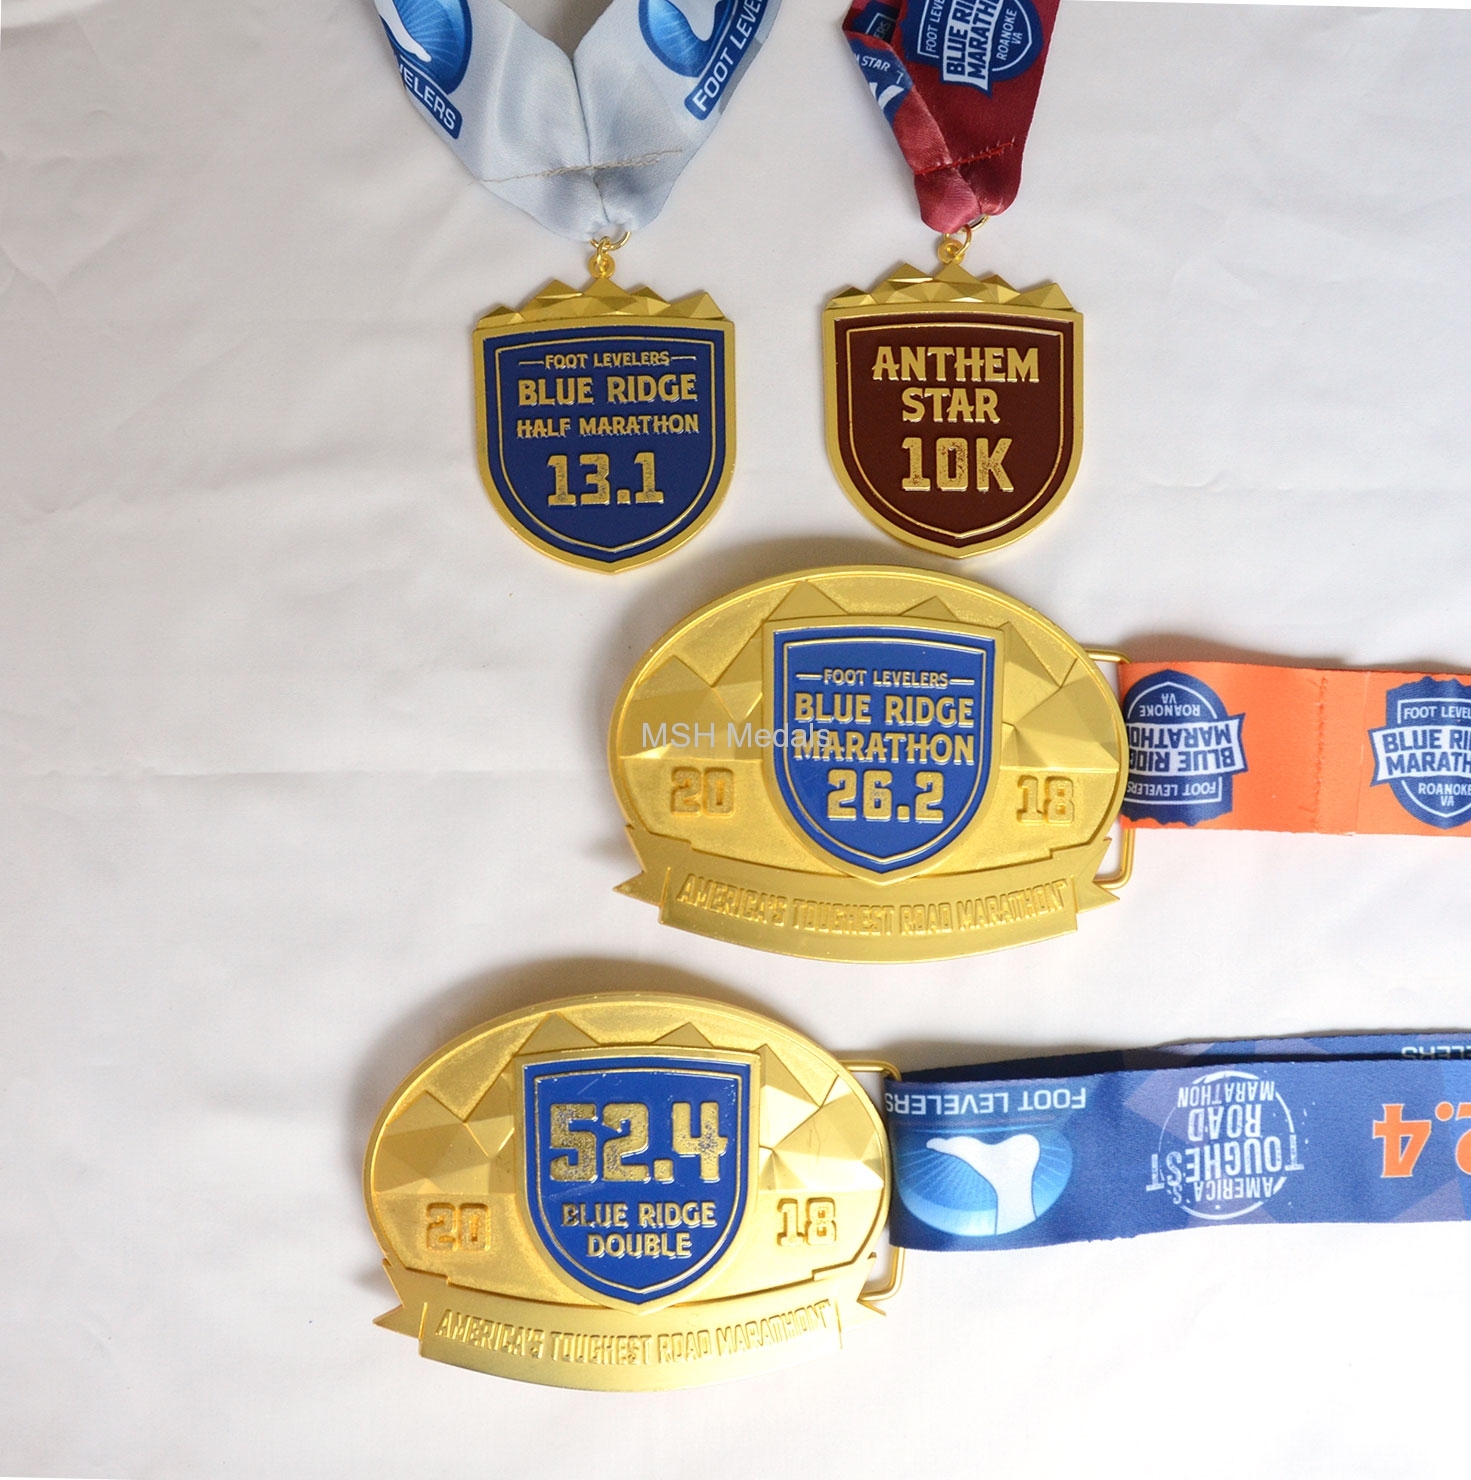 Blue Ridge Marathon 2018 race series medals